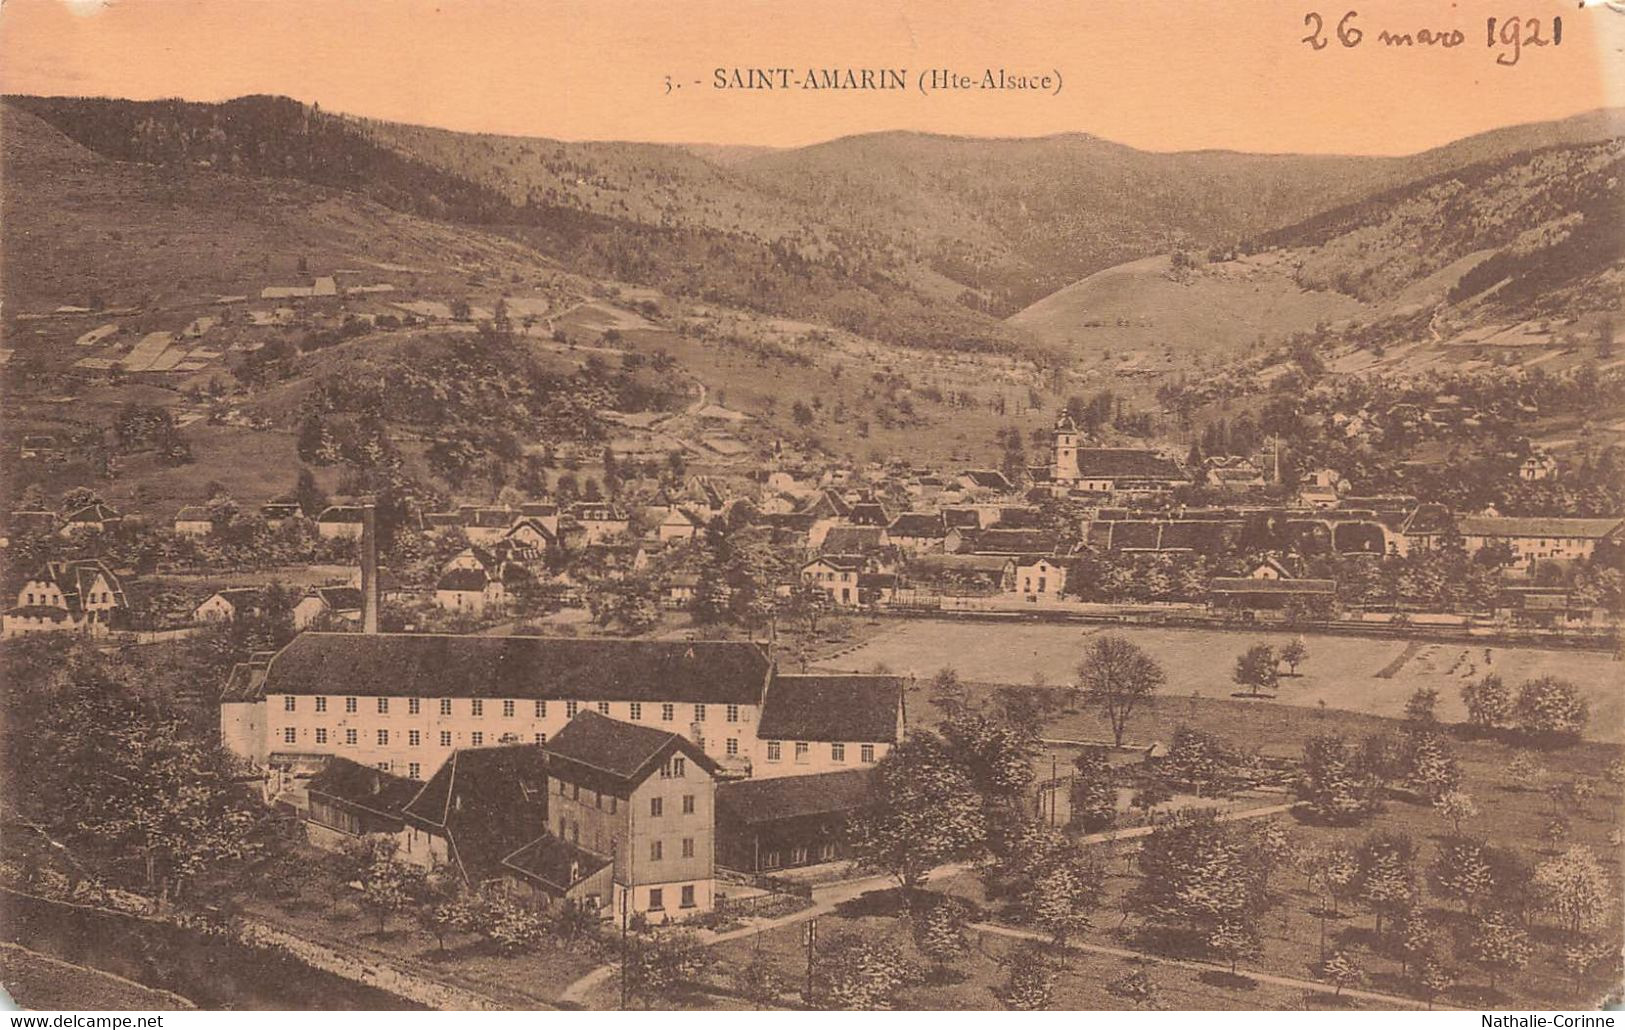 Saint-Amarin (Hte-Alsace) - 1921 - Saint Amarin